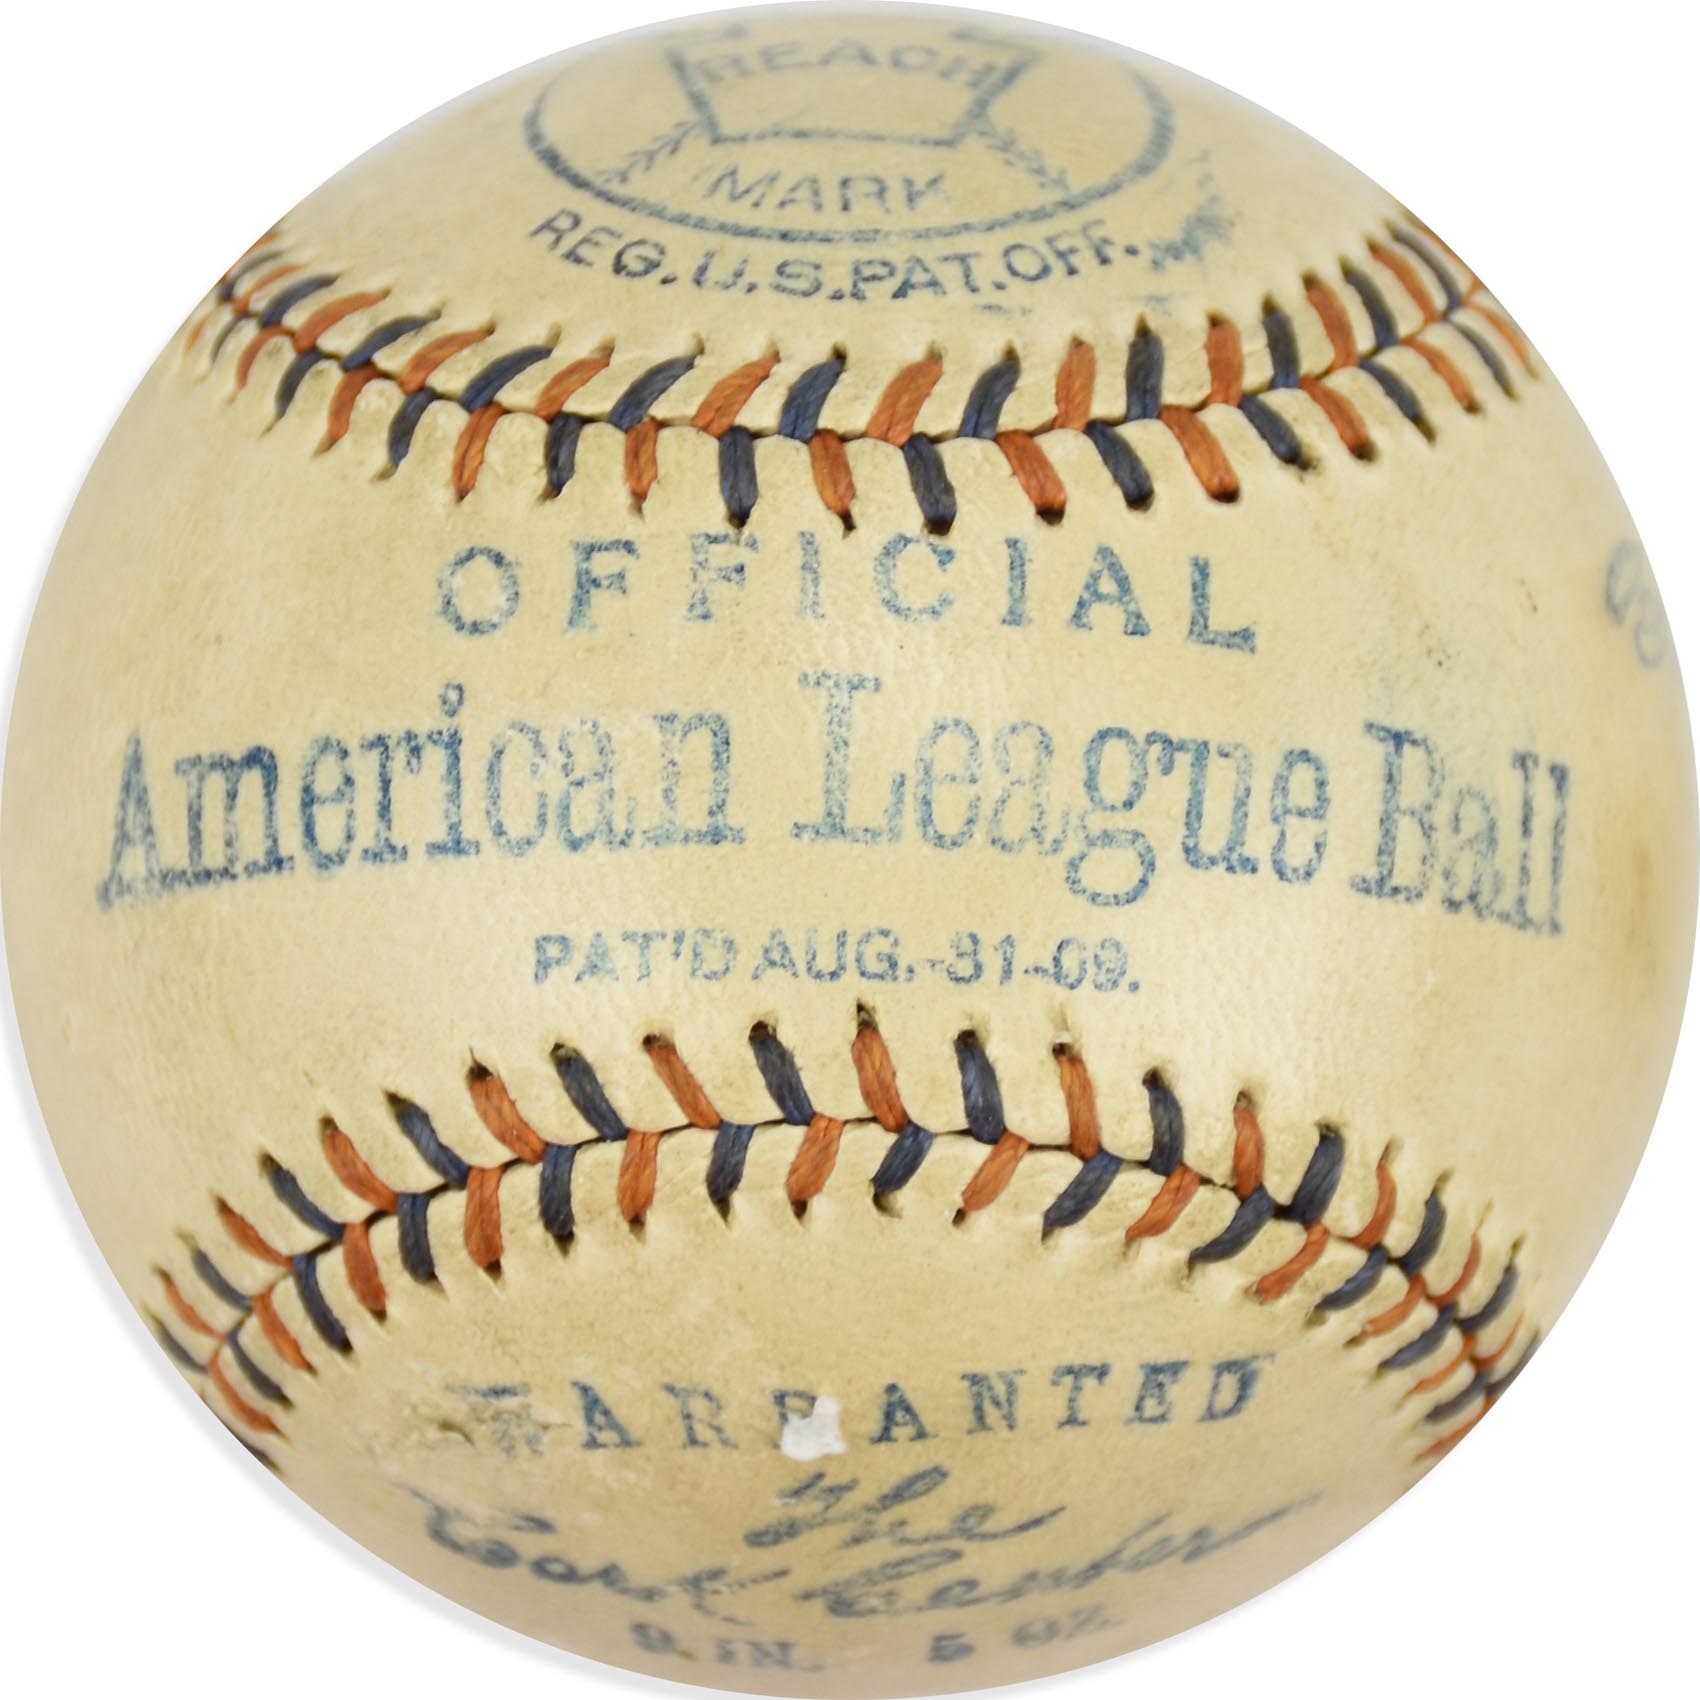 1909 Patent Ban Johnson Official American League Baseball